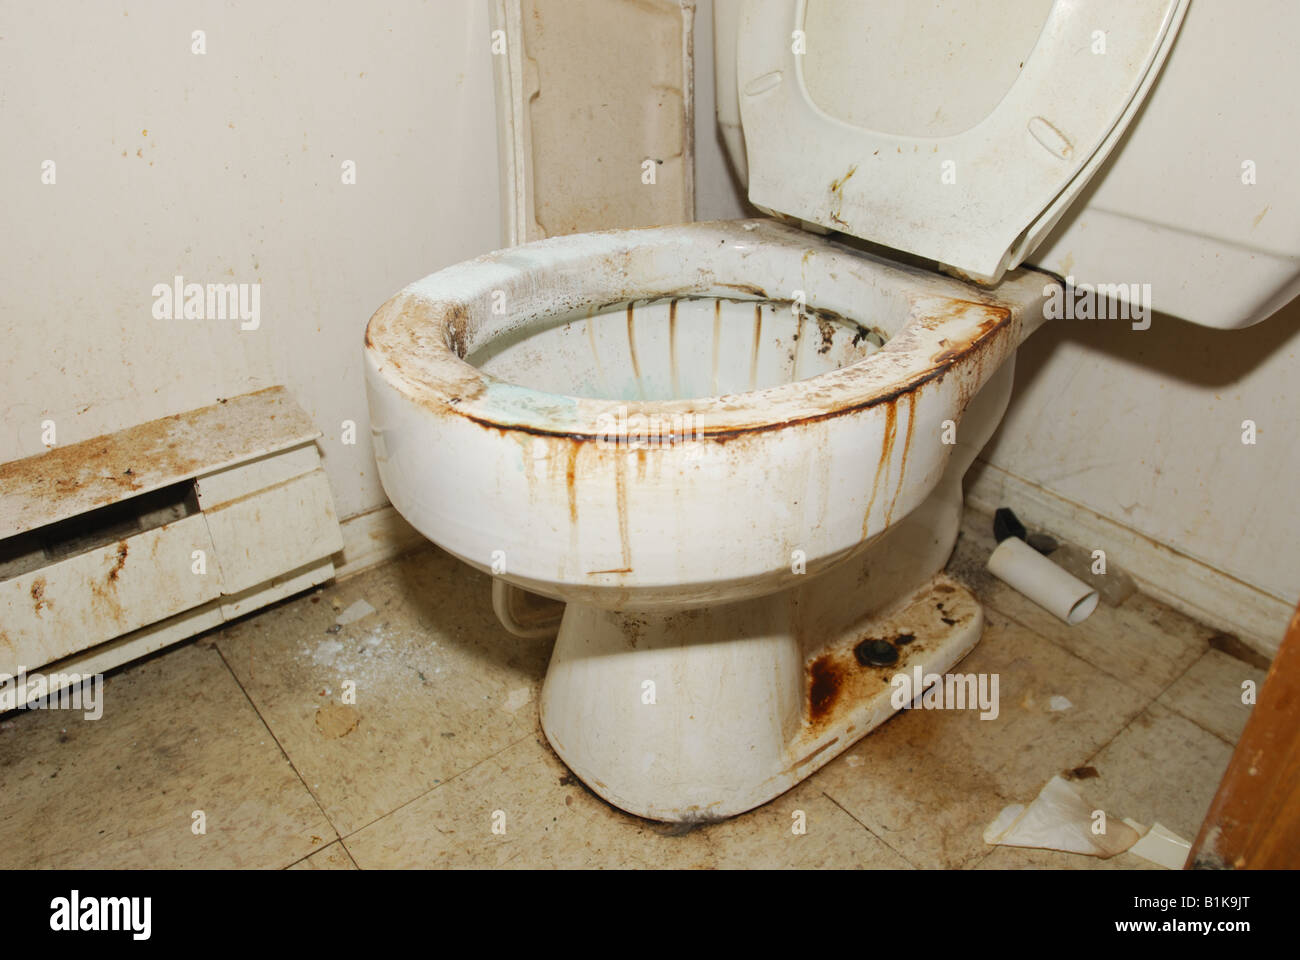 filthy-dirty-toilet-B1K9JT.jpg